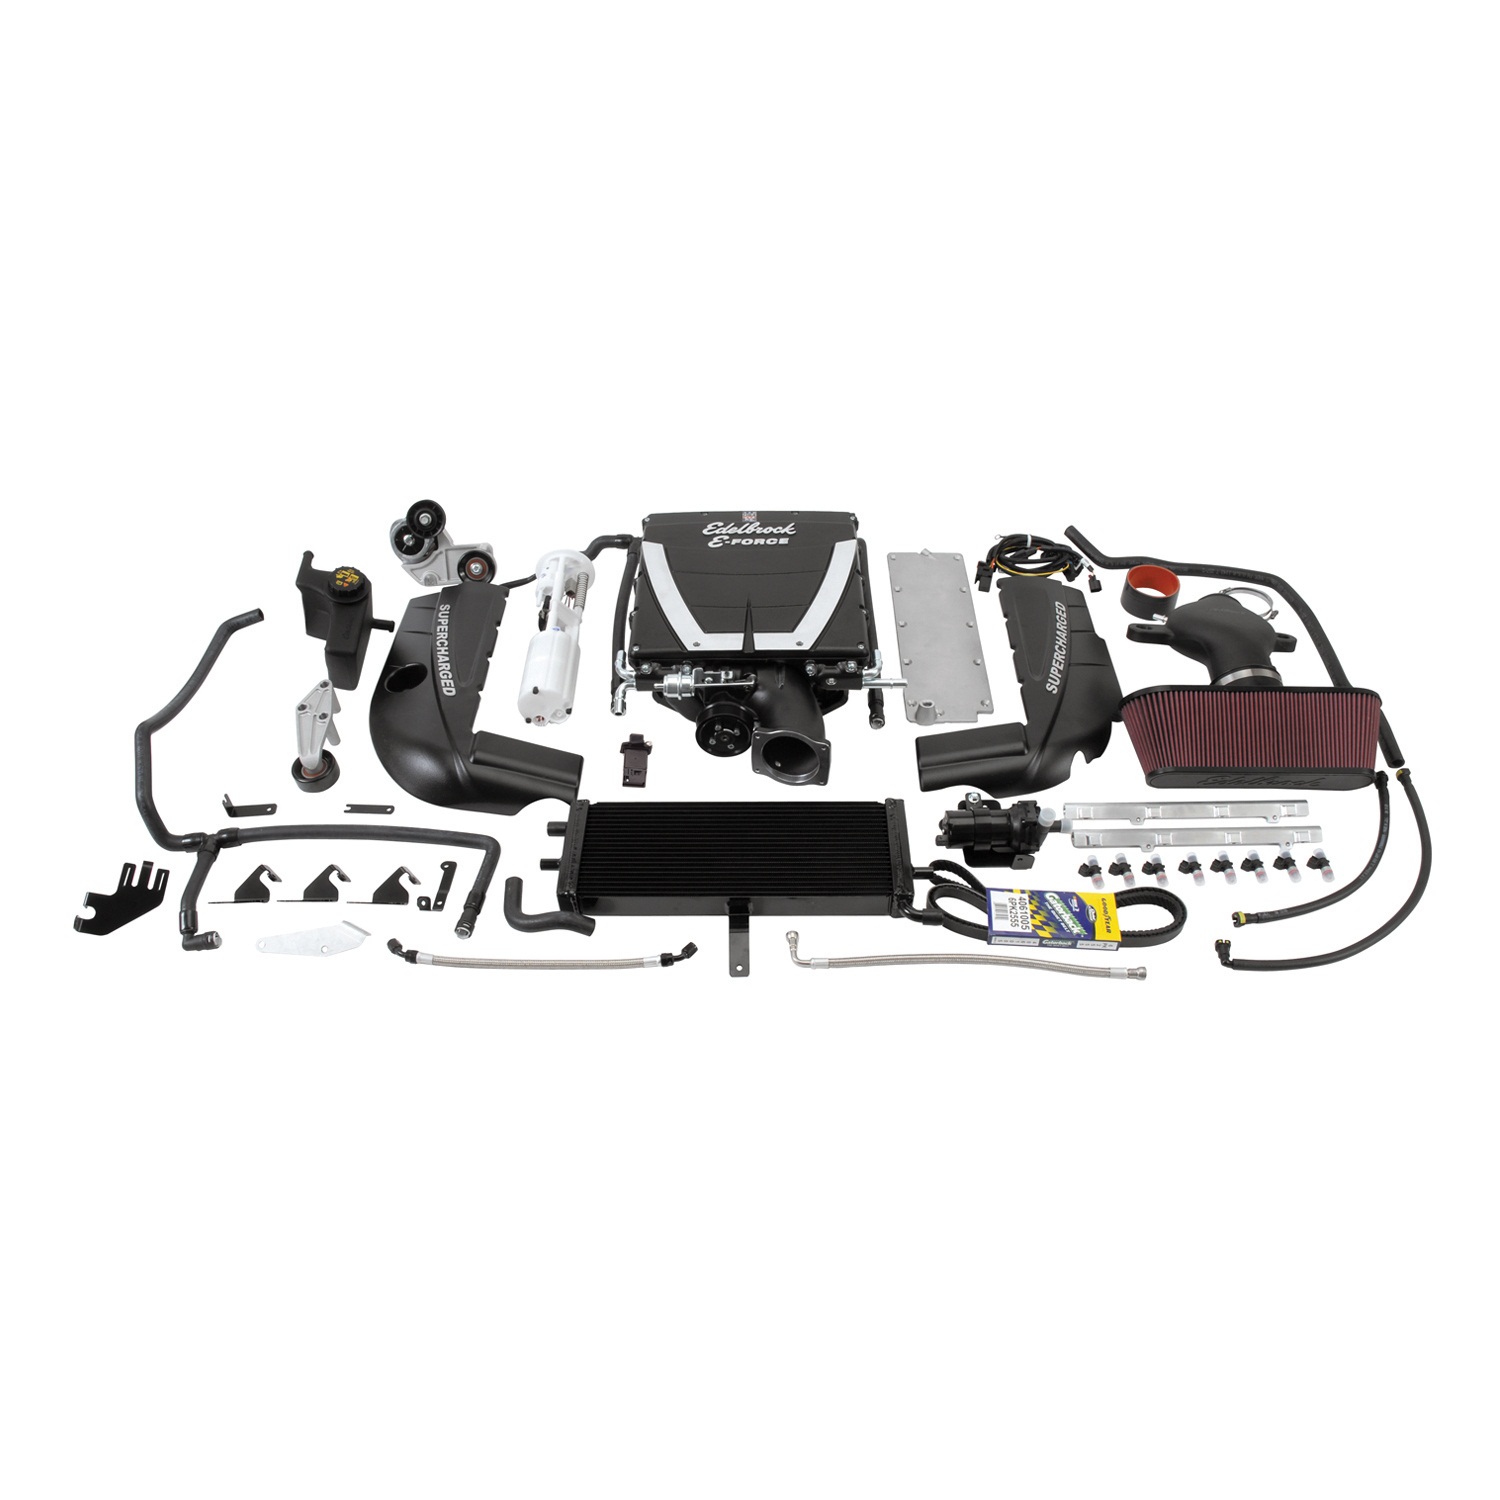 Edelbrock Supercharger, Stage 1-Street Kit, 2005-2007, GM, Corvette, LS2, Without Tuner, Part# 15940